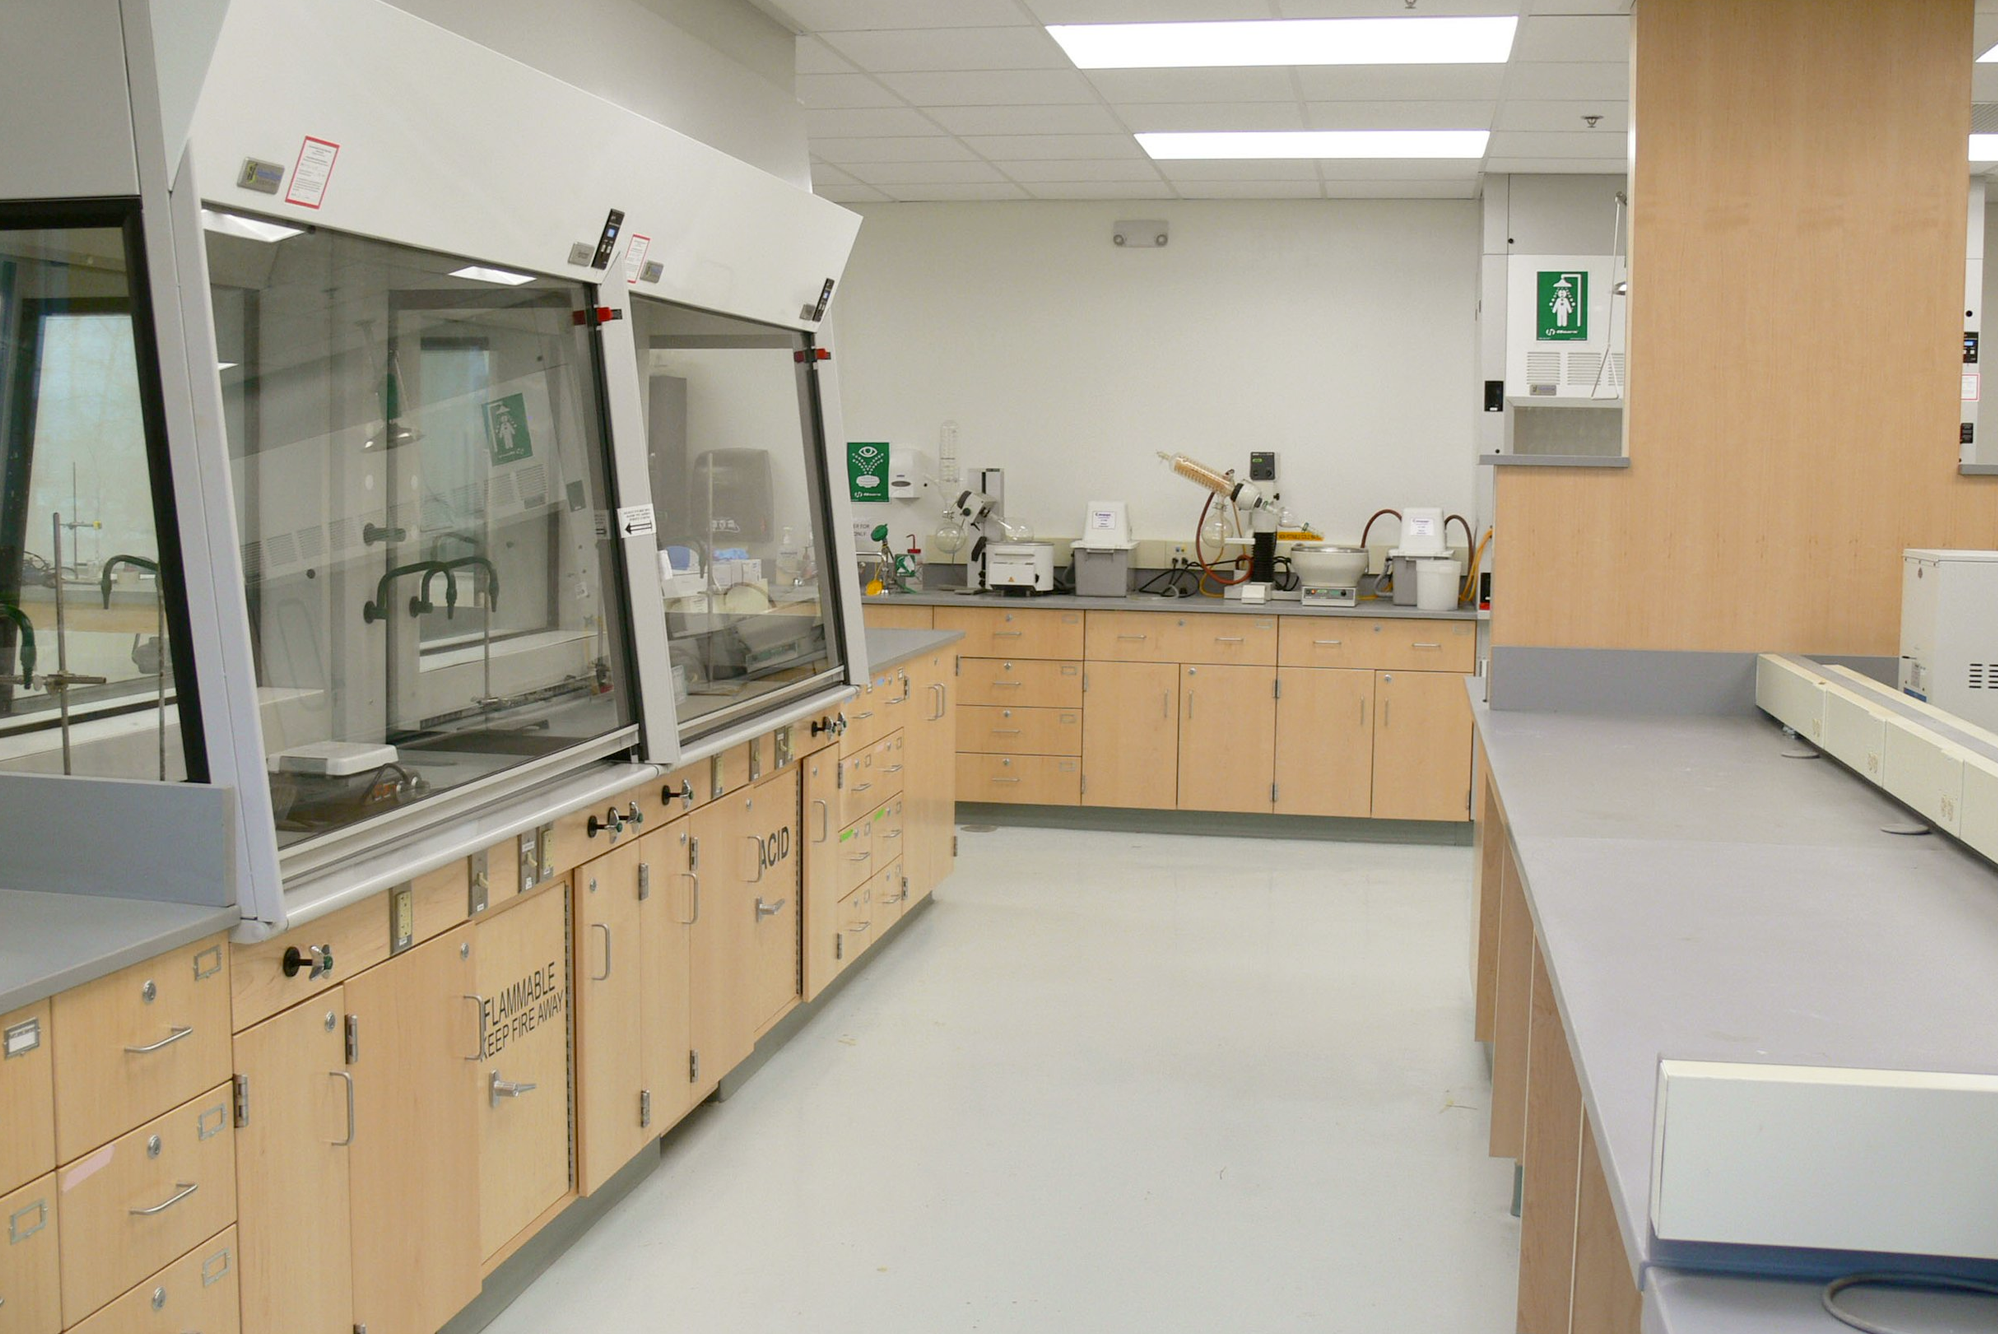 Interior, Olney Teaching Laboratory at UMass Lowell, work stations, fume hoods, storage, equipment